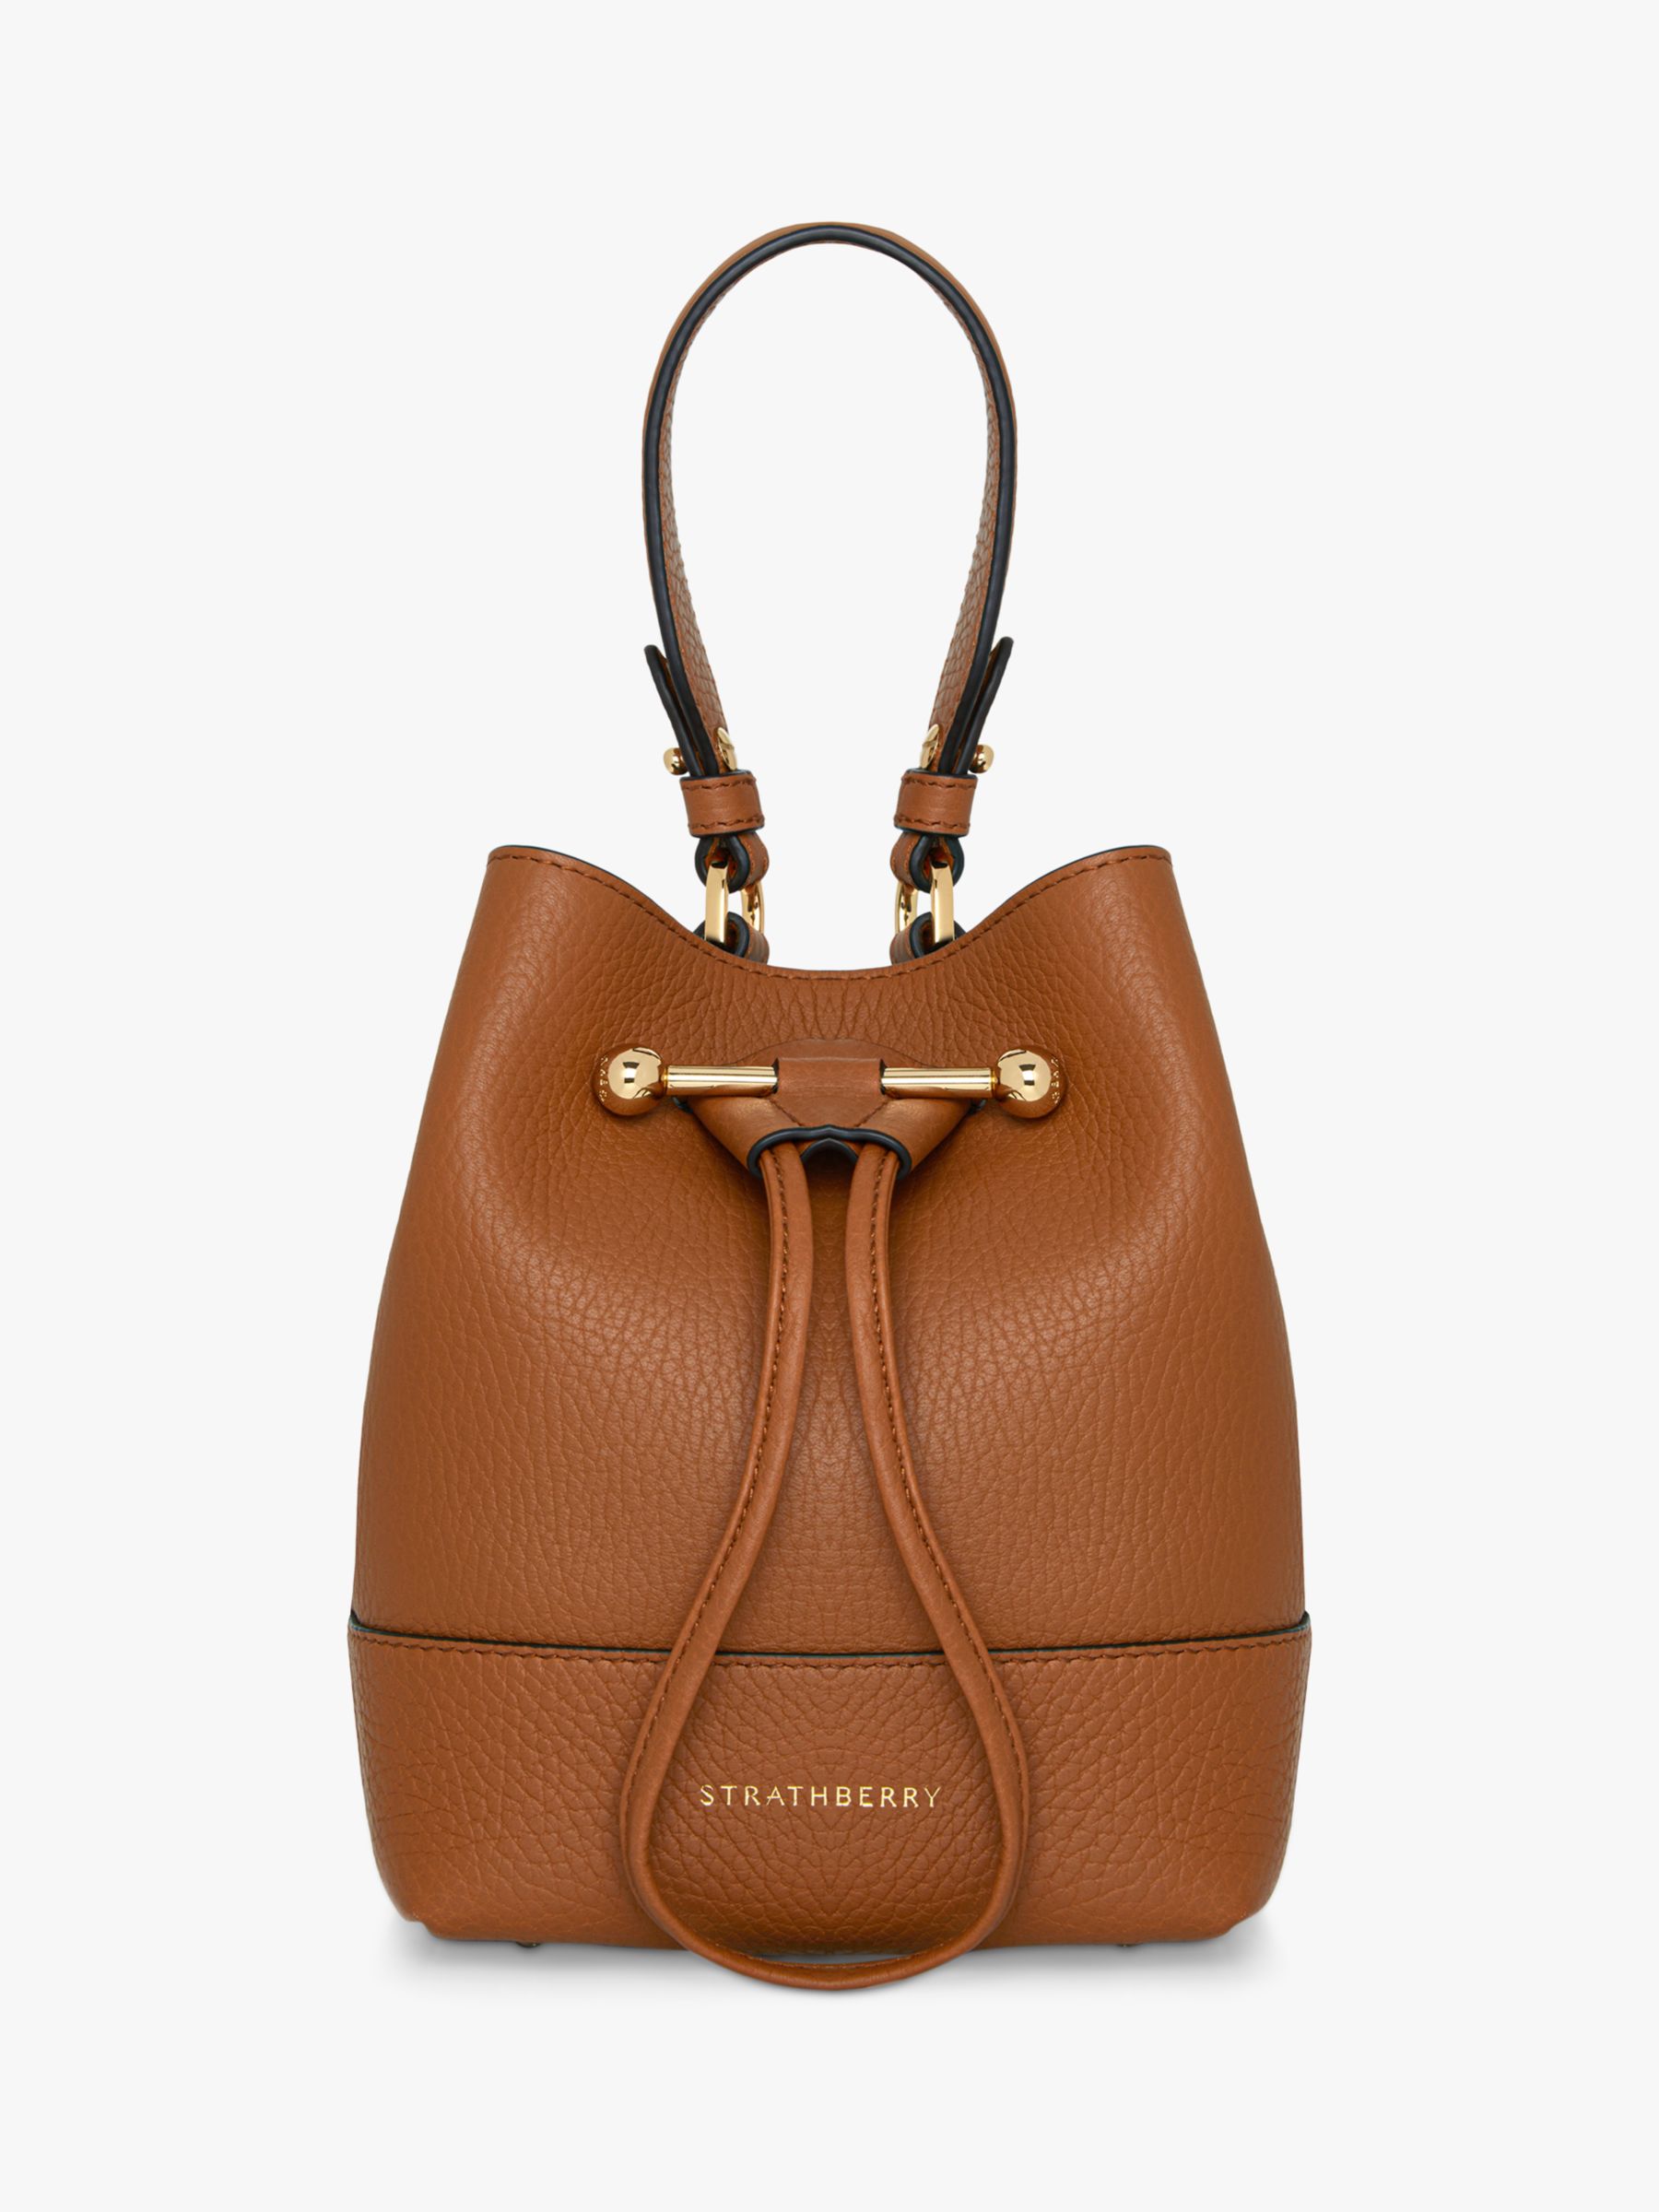 Strathberry Leather Bucket Bag - Brown Bucket Bags, Handbags - STRAT21240